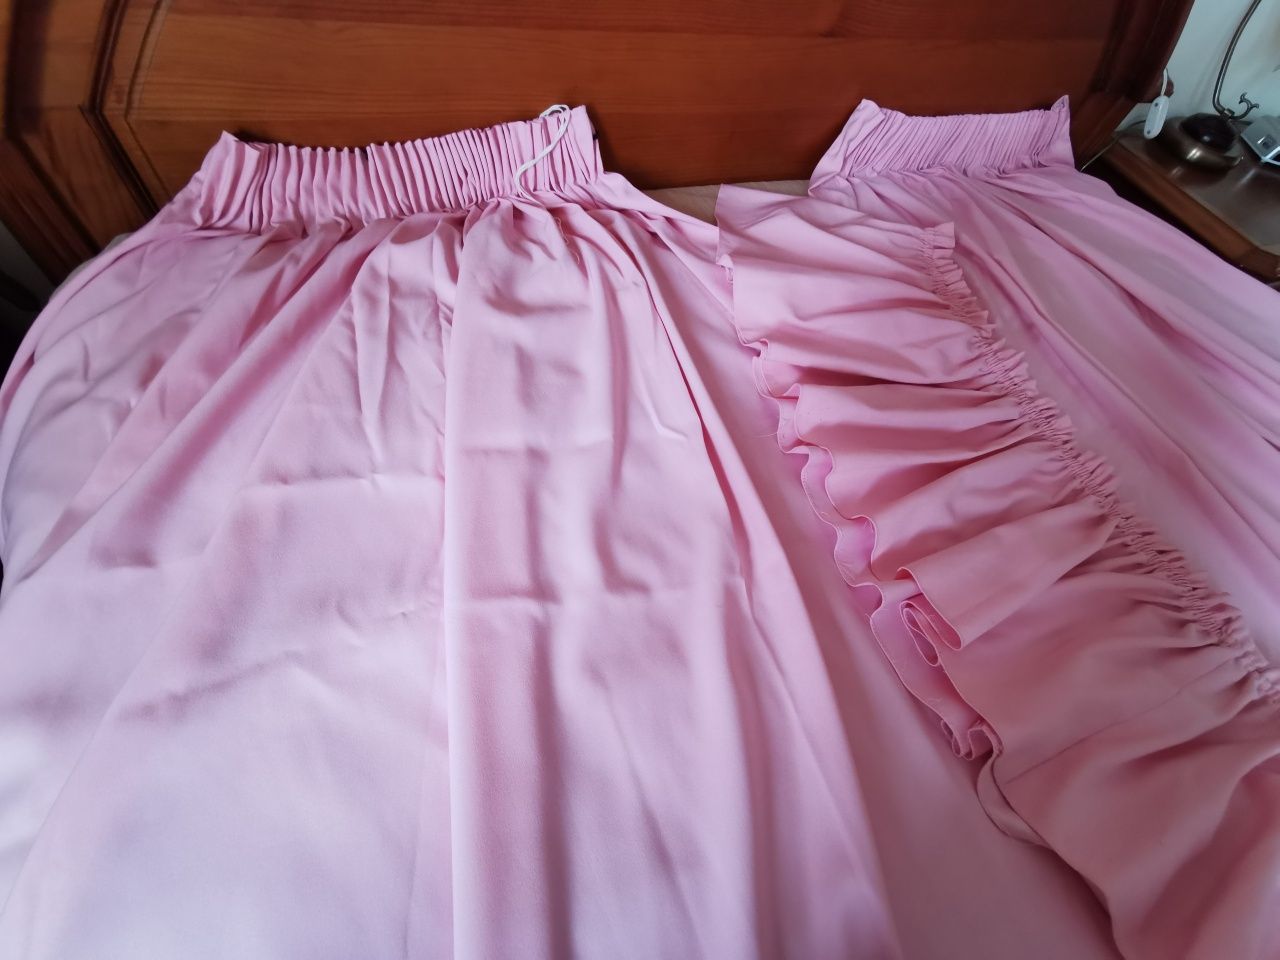 Capa de edredon rosa com cortinas laterais